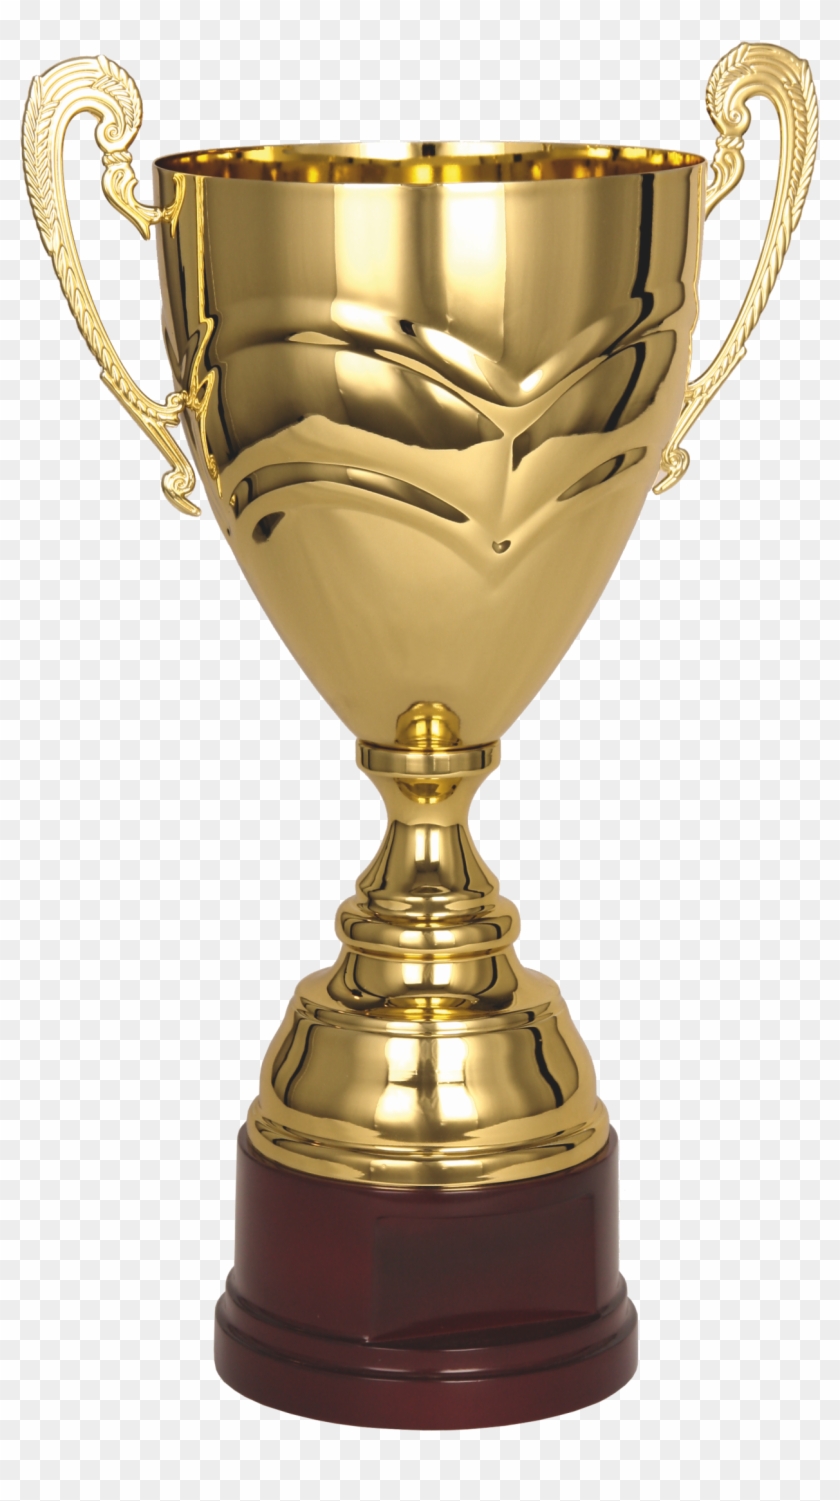 Golden Cup - Trophy Transparent Background #609123